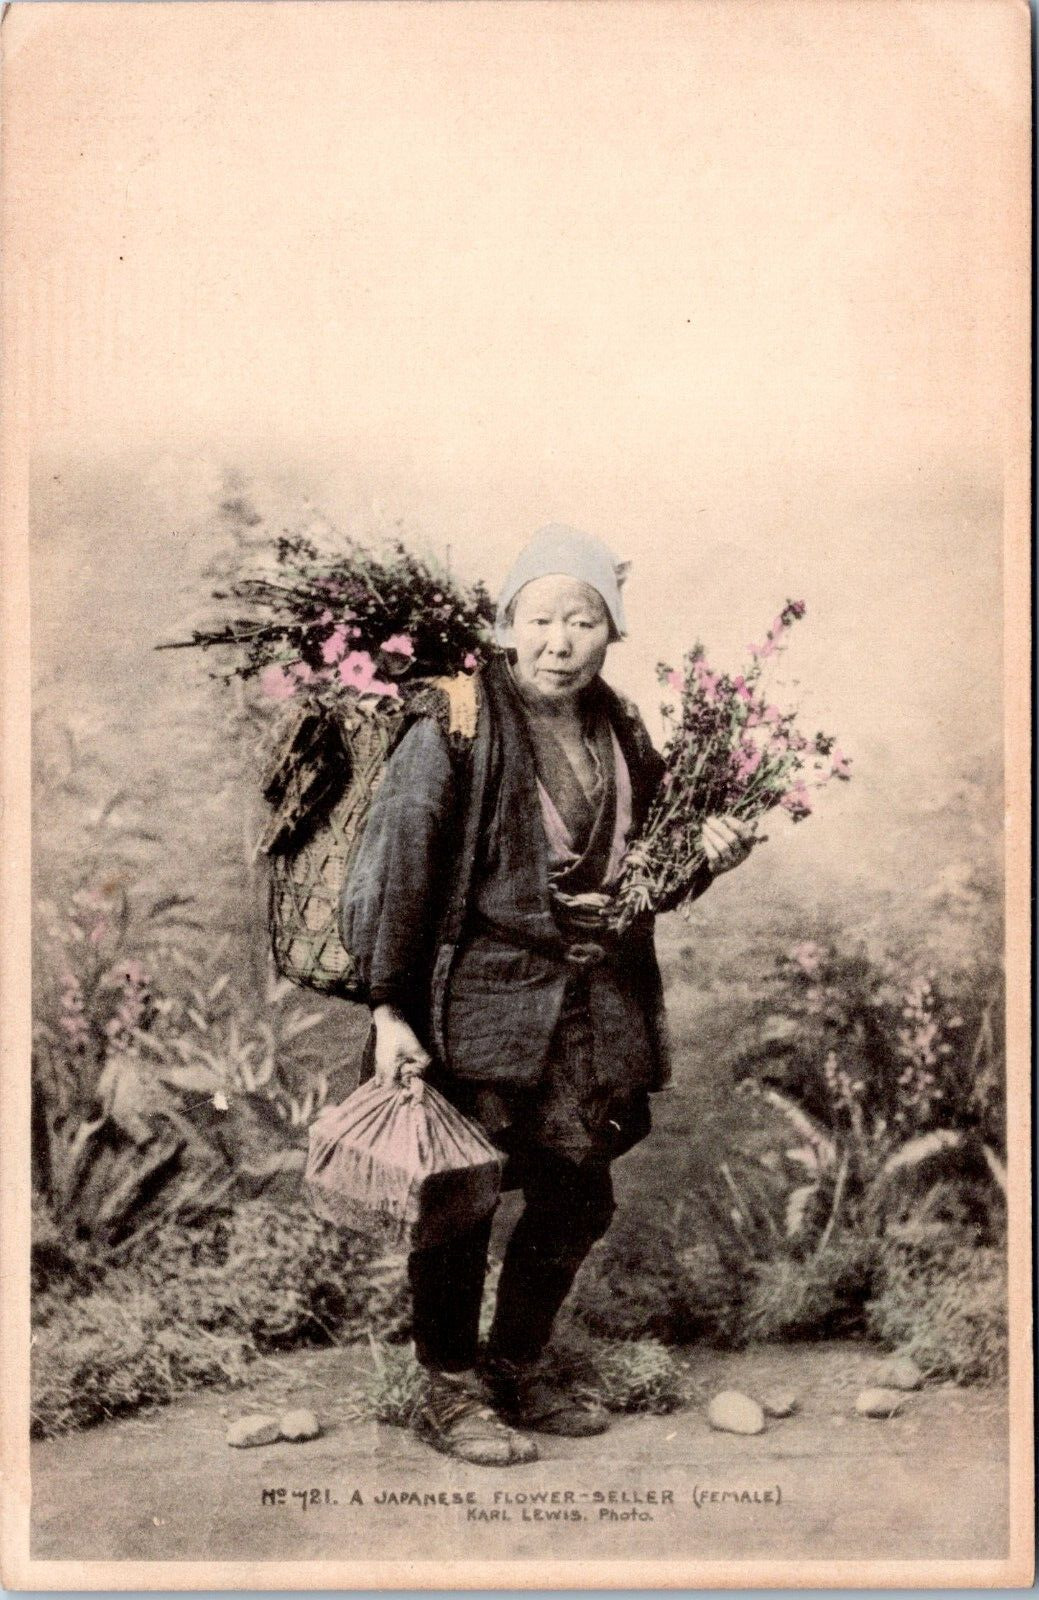 RPPC Japanese  Peasant Flower Seller, Japan - Photo Postcard - Hand tinted